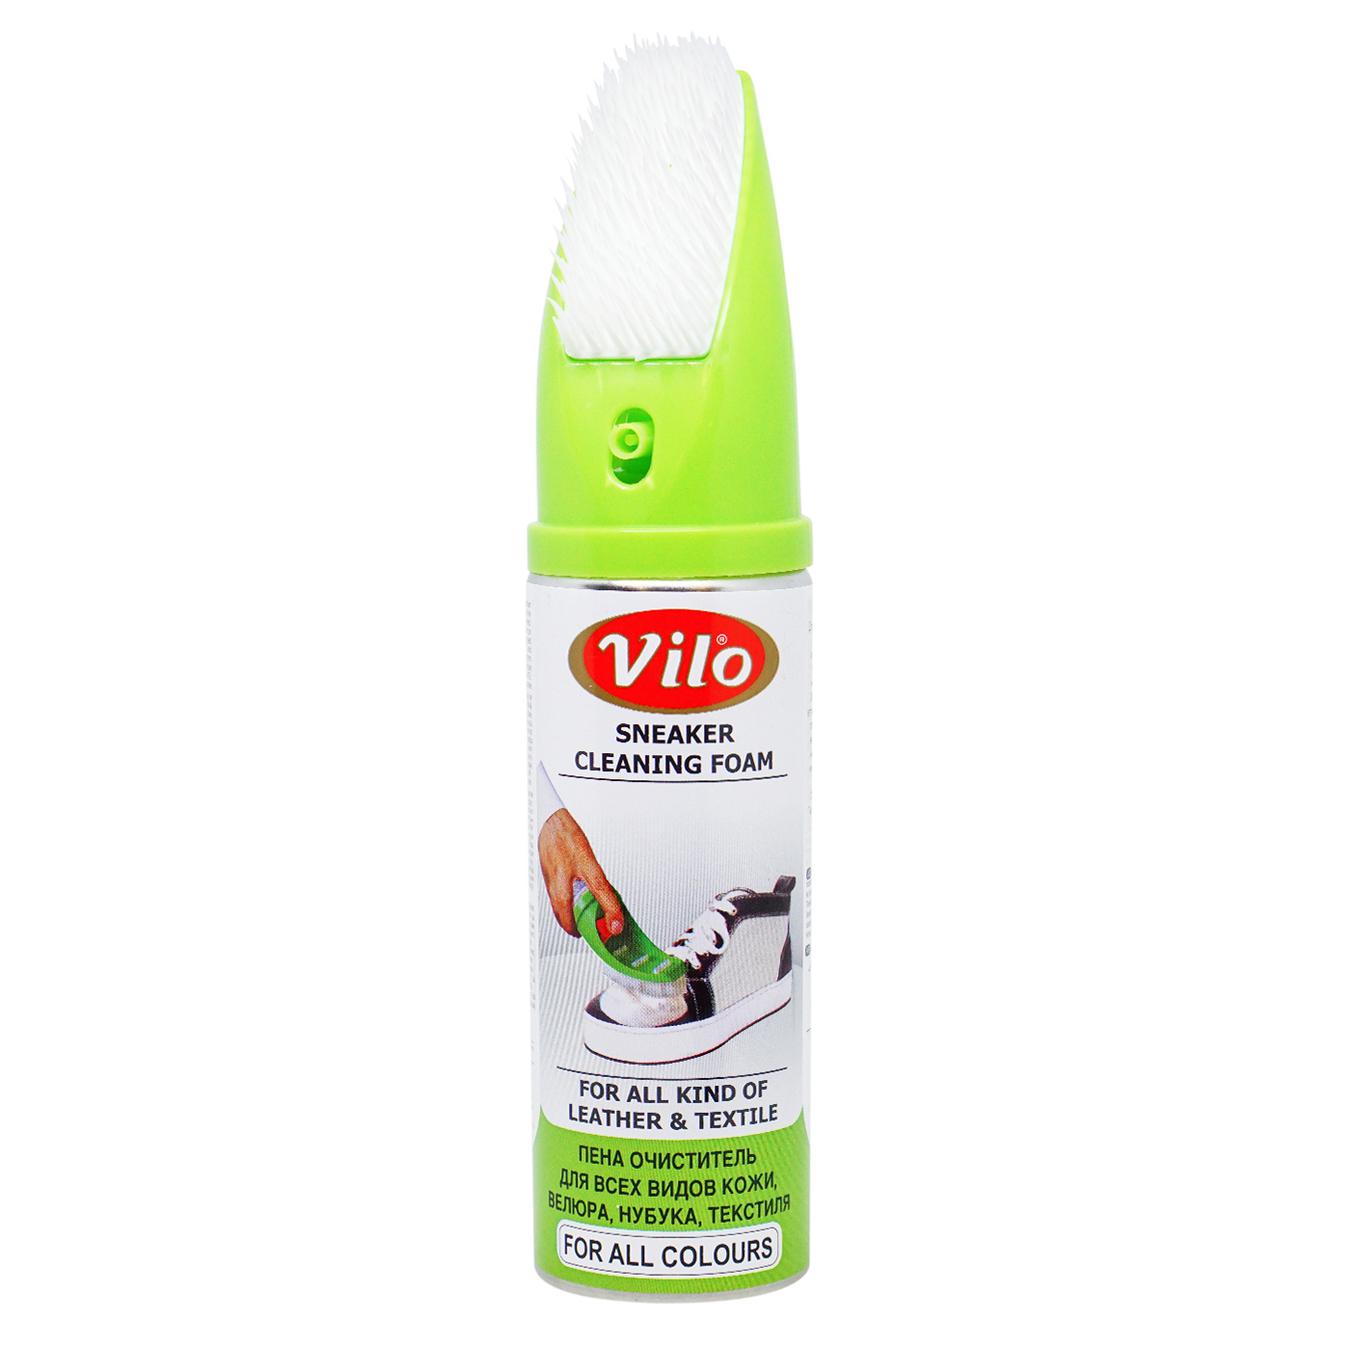 Vilo foam for cleaning sneakers 200 ml